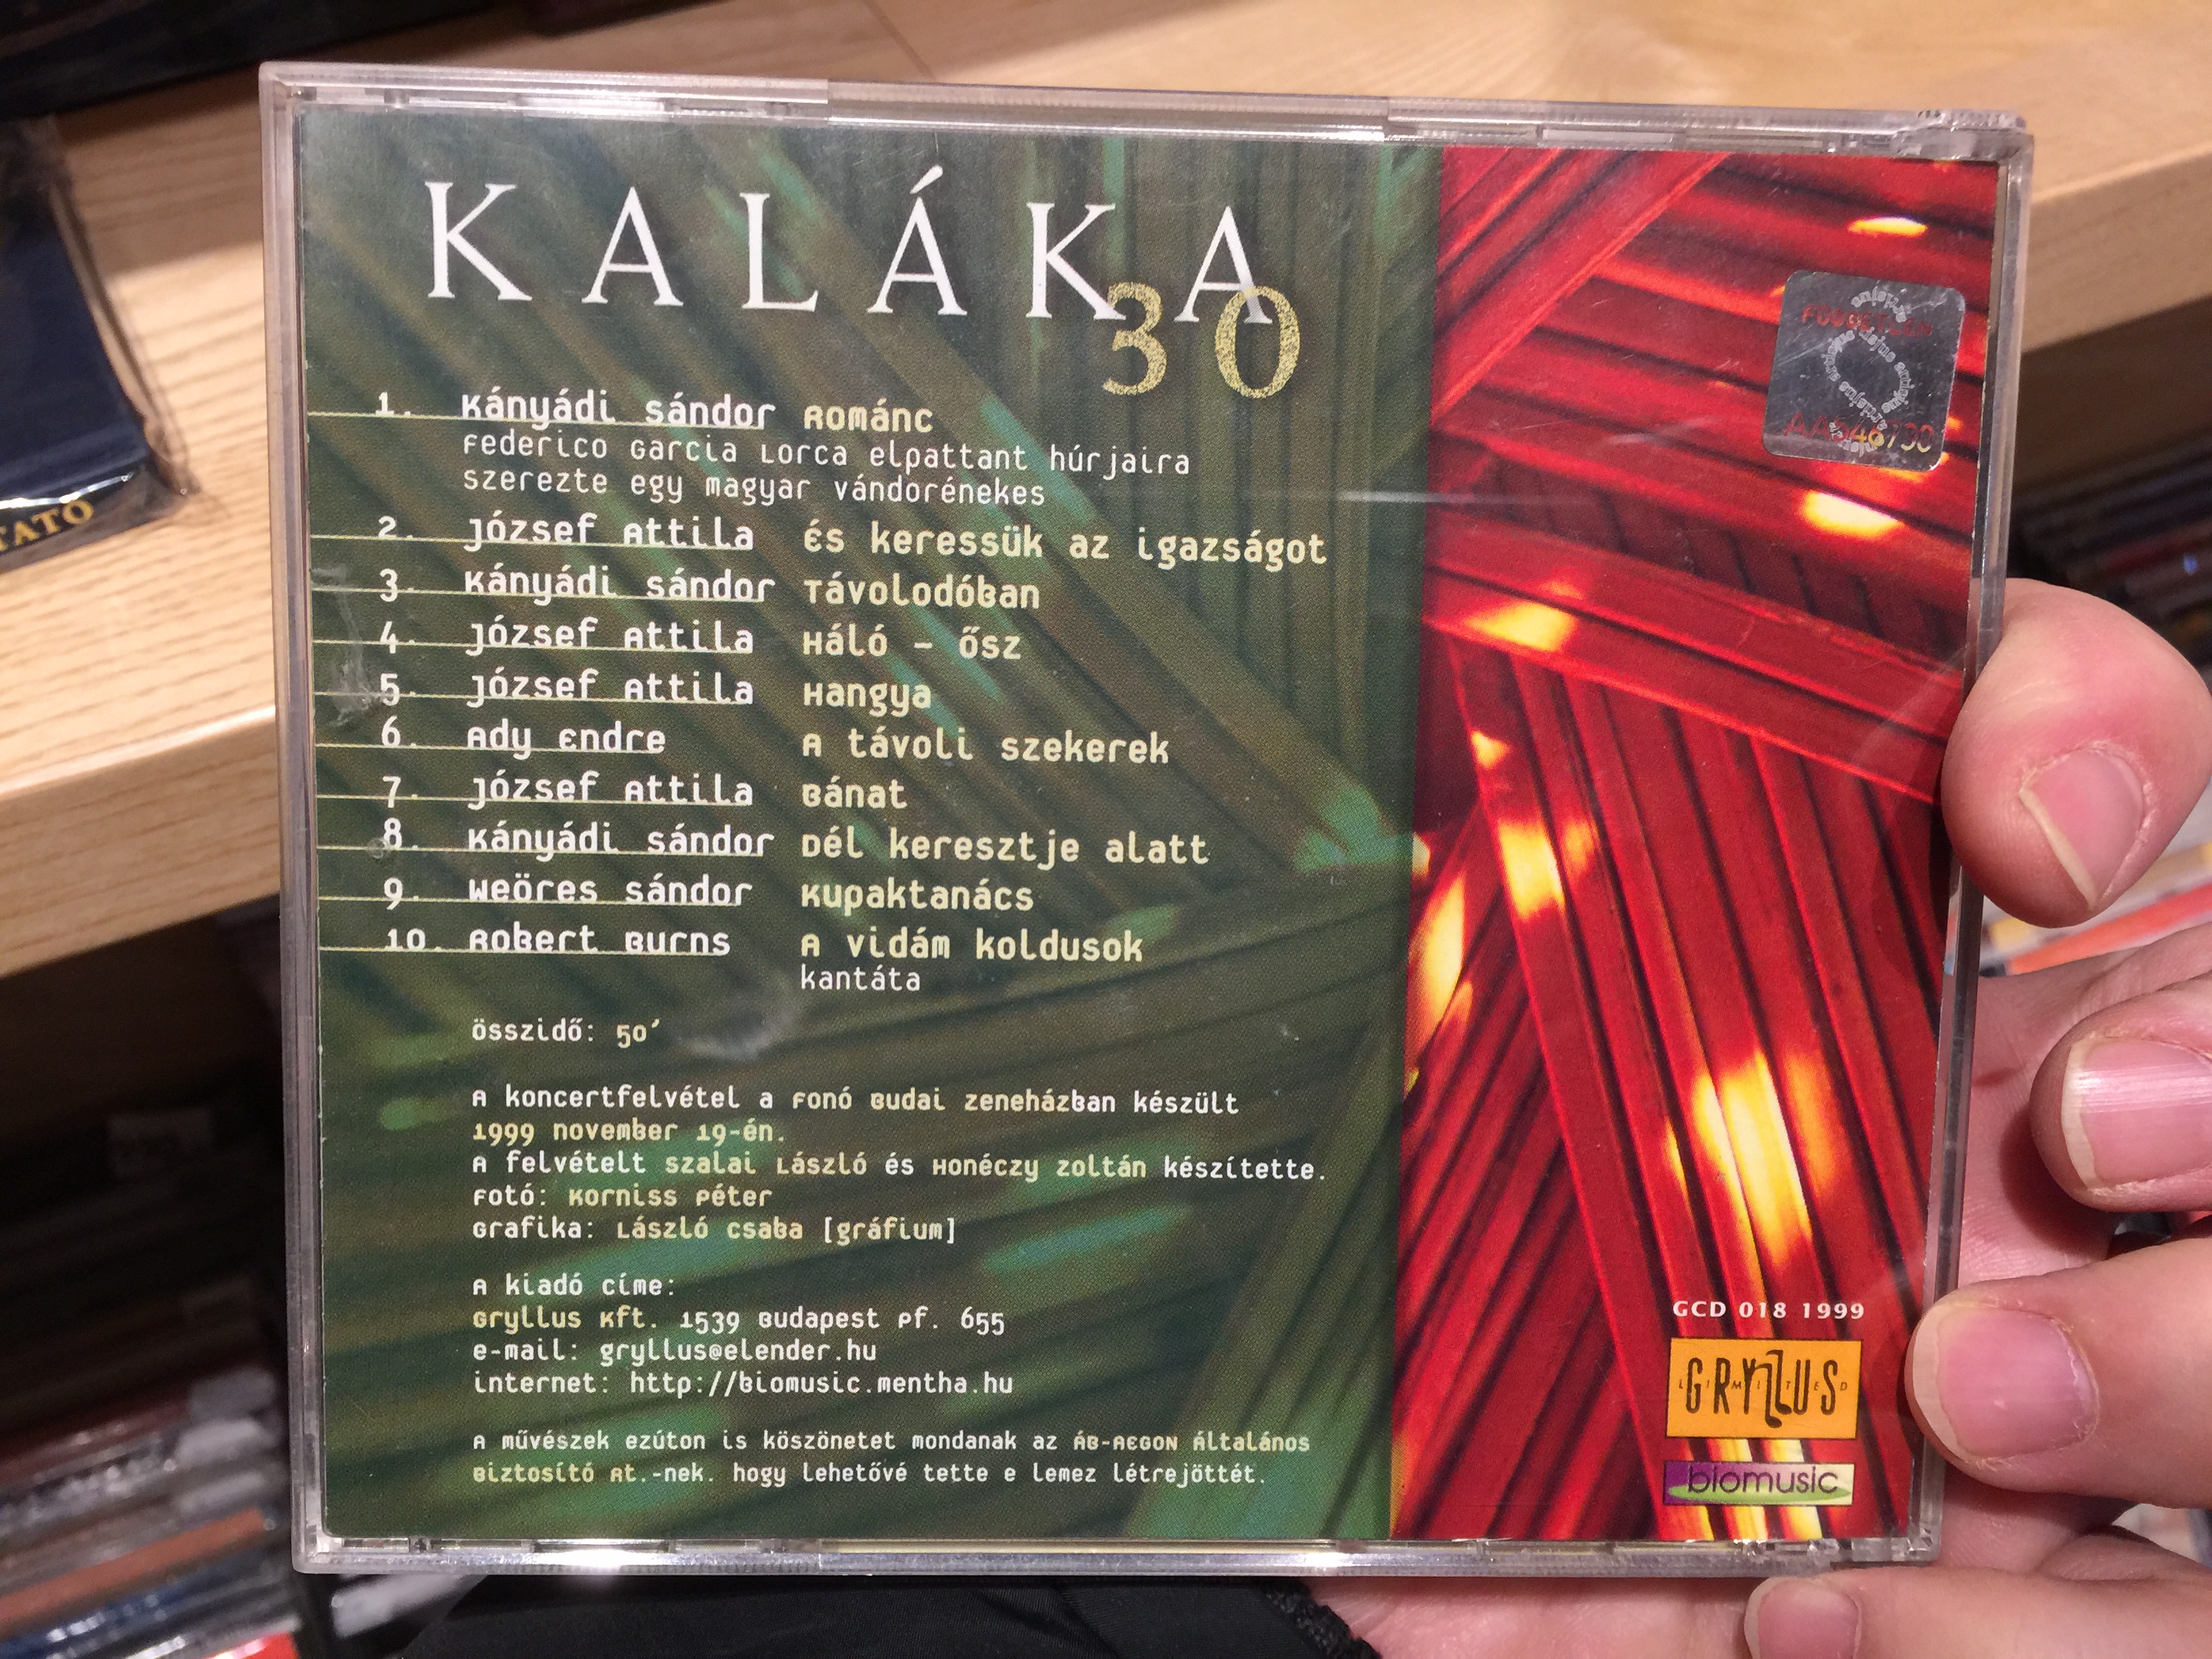 kal-ka-30-gryllus-audio-cd-1999-gcd-018-2-.jpg